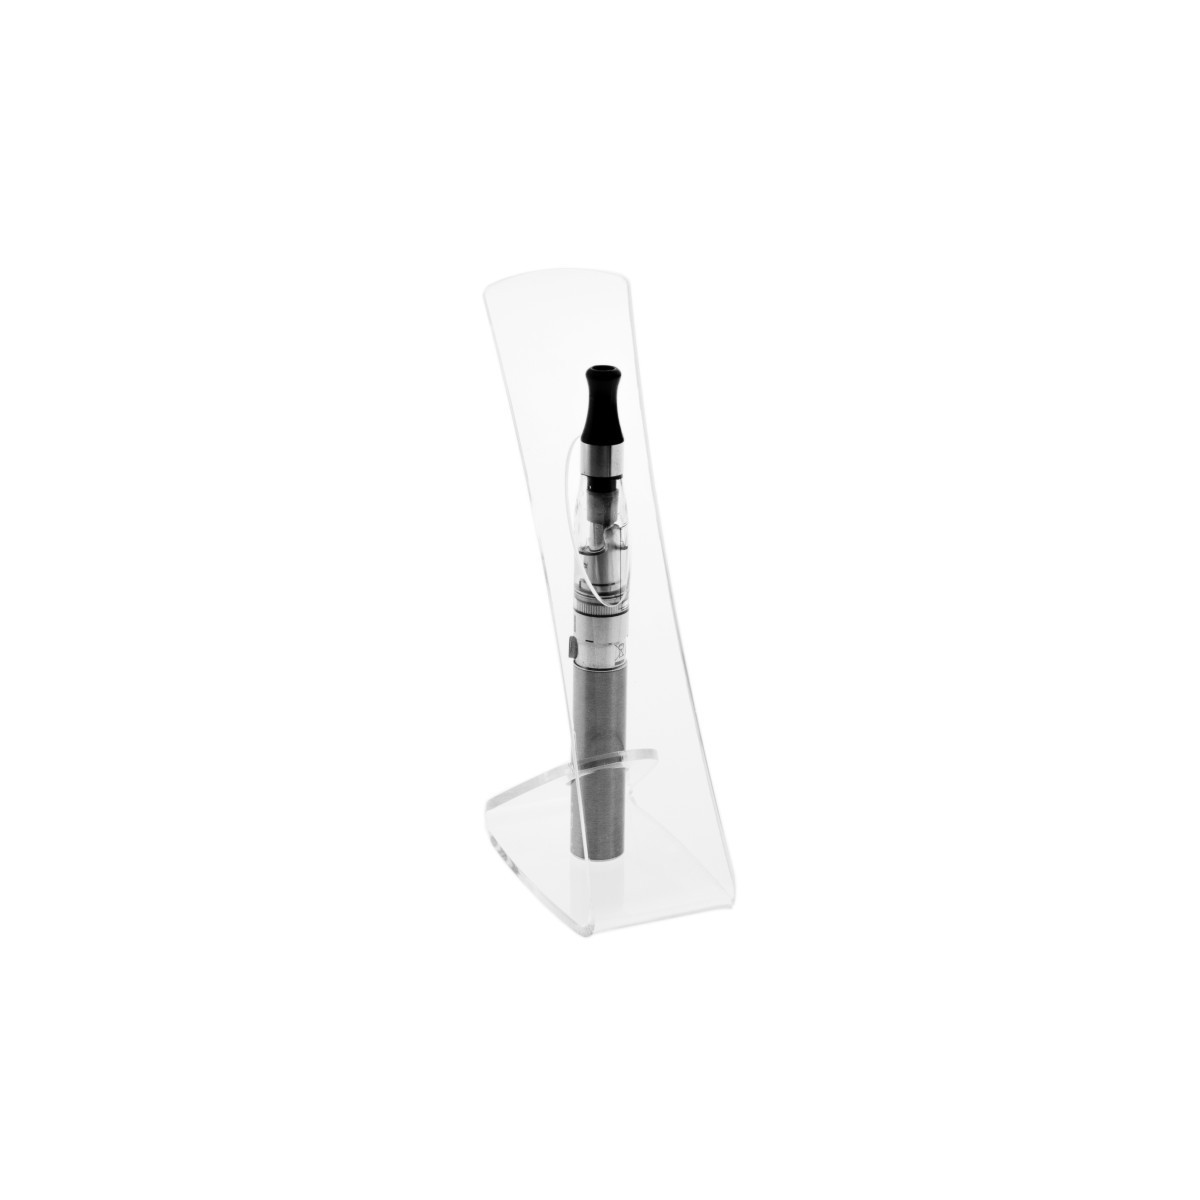 Expositor de mostrador para cigarrillo electrónico en plexiglás transparente